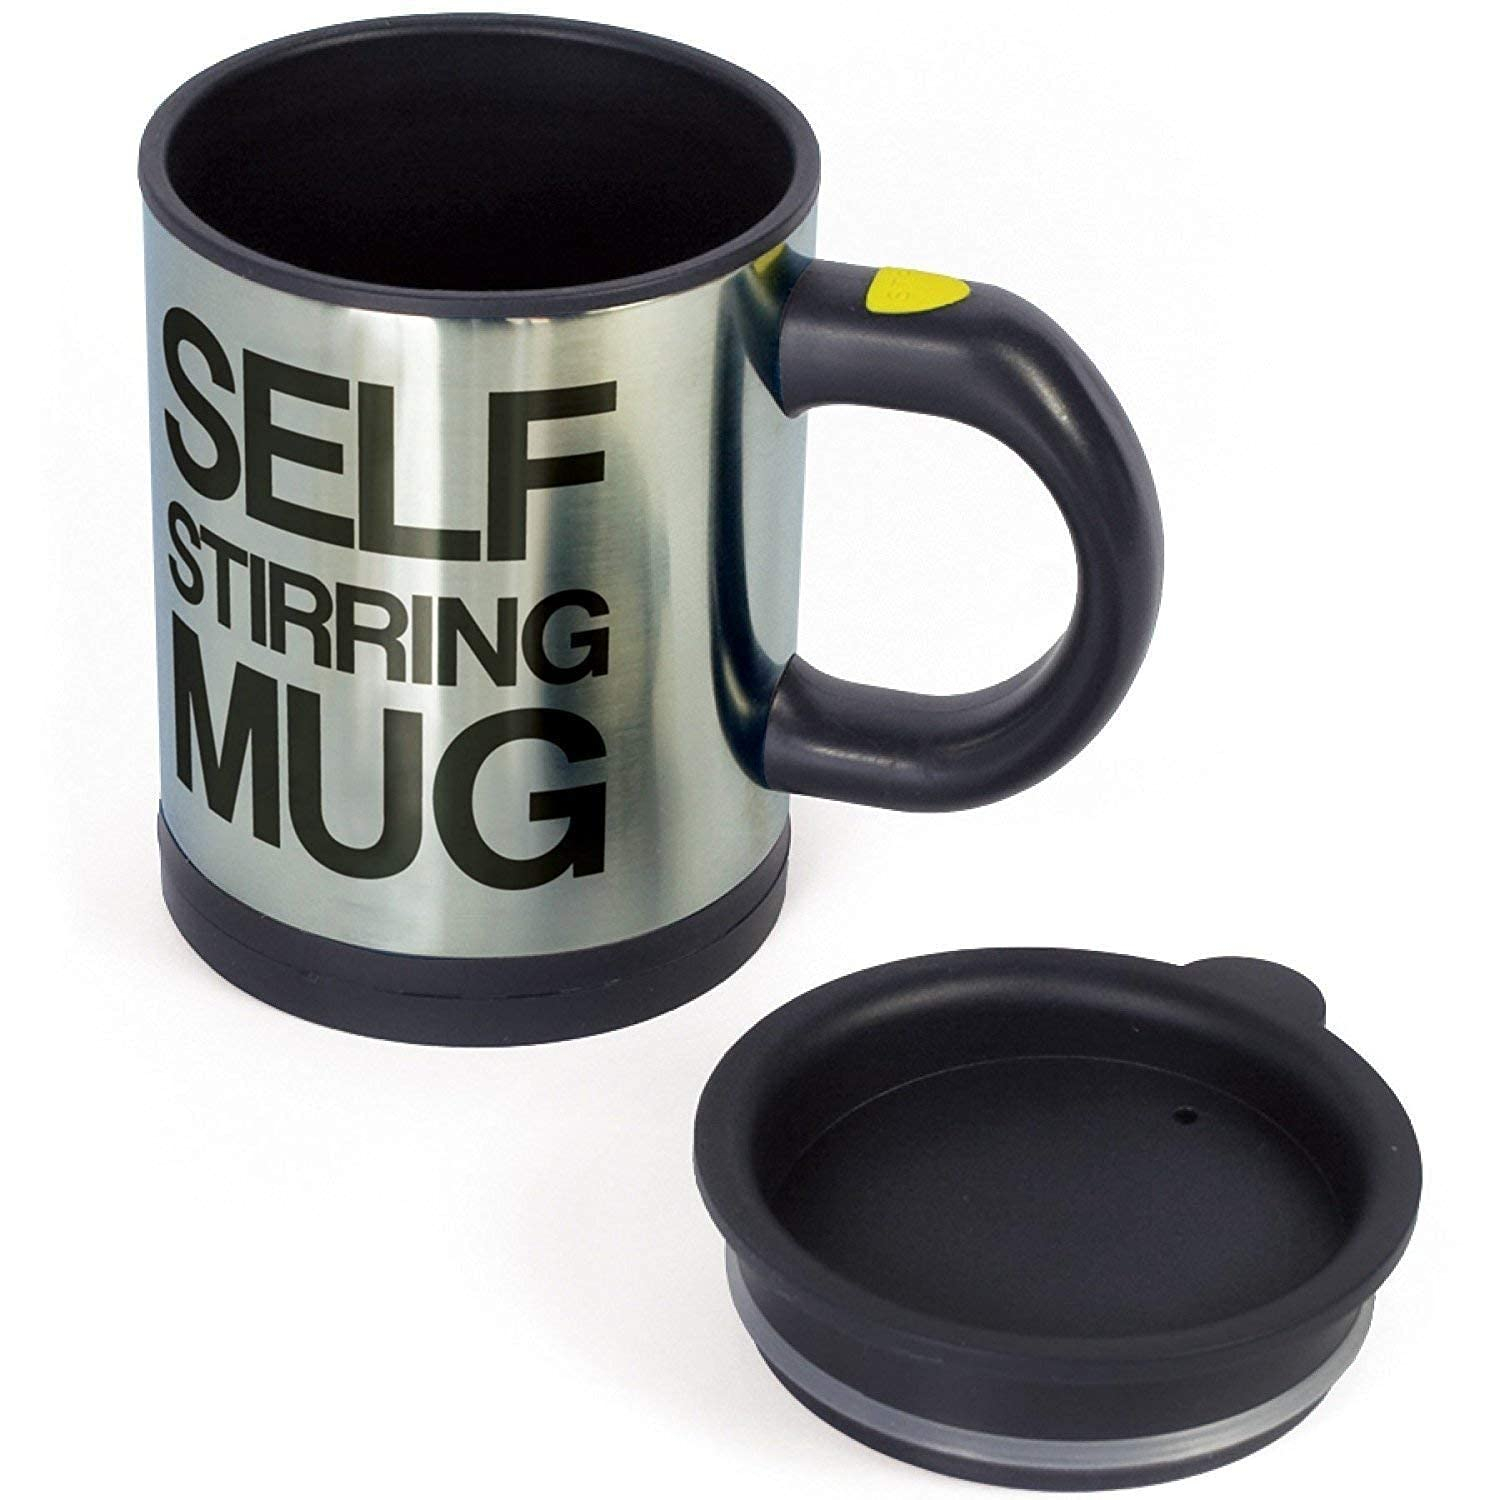 The Spinning Self Stirring Mug